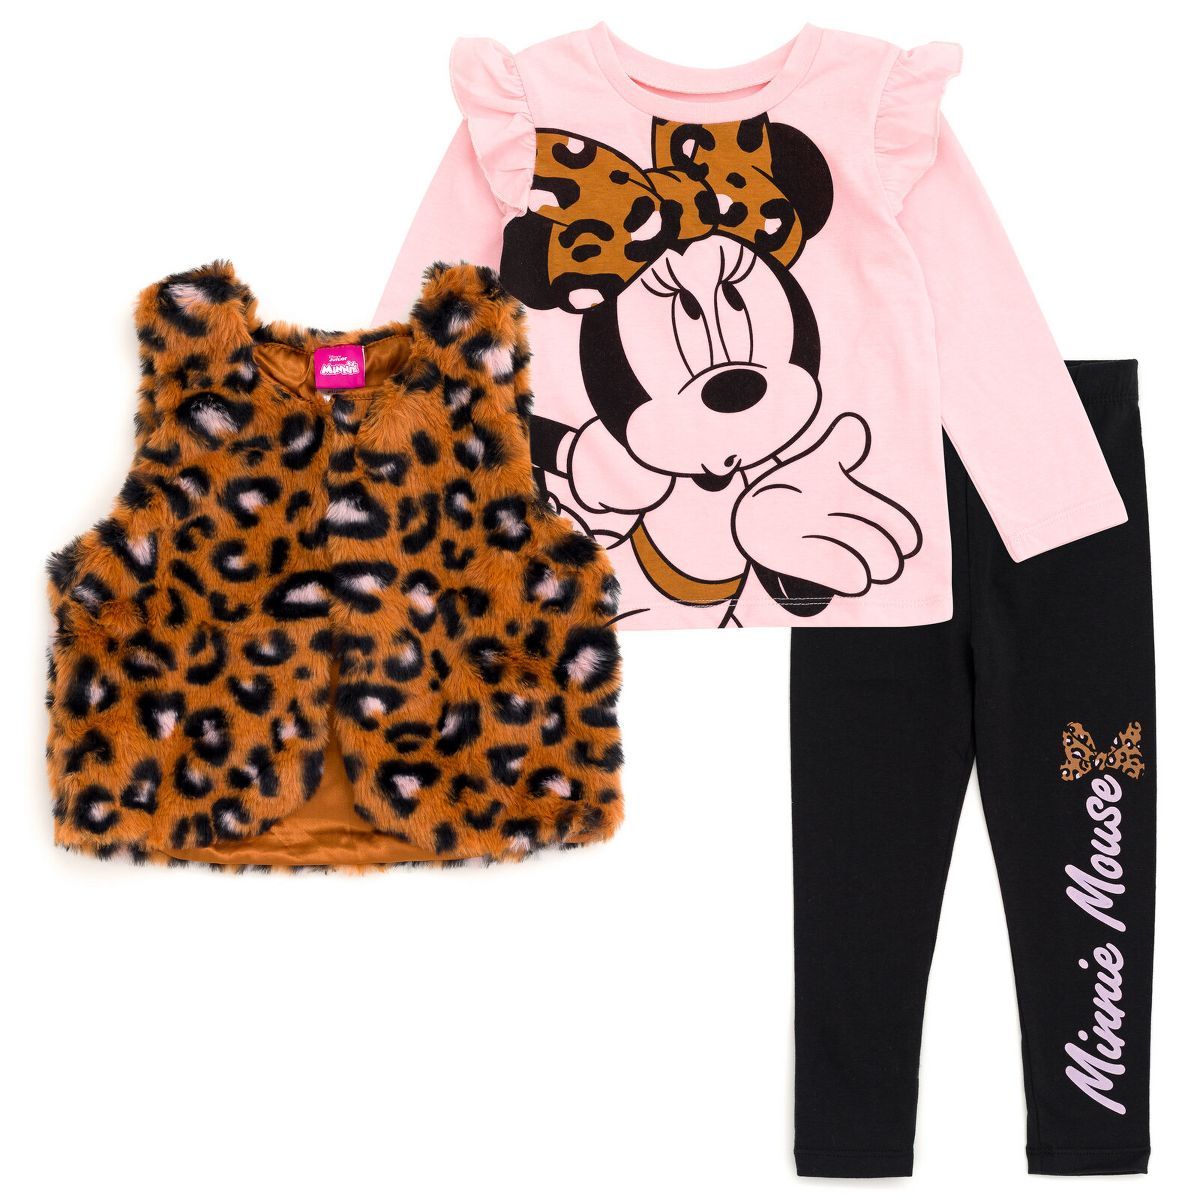 TargetClothing, Shoes & AccessoriesKids’ ClothingGirls’ ClothingShop all DisneyDisney Minnie ... | Target